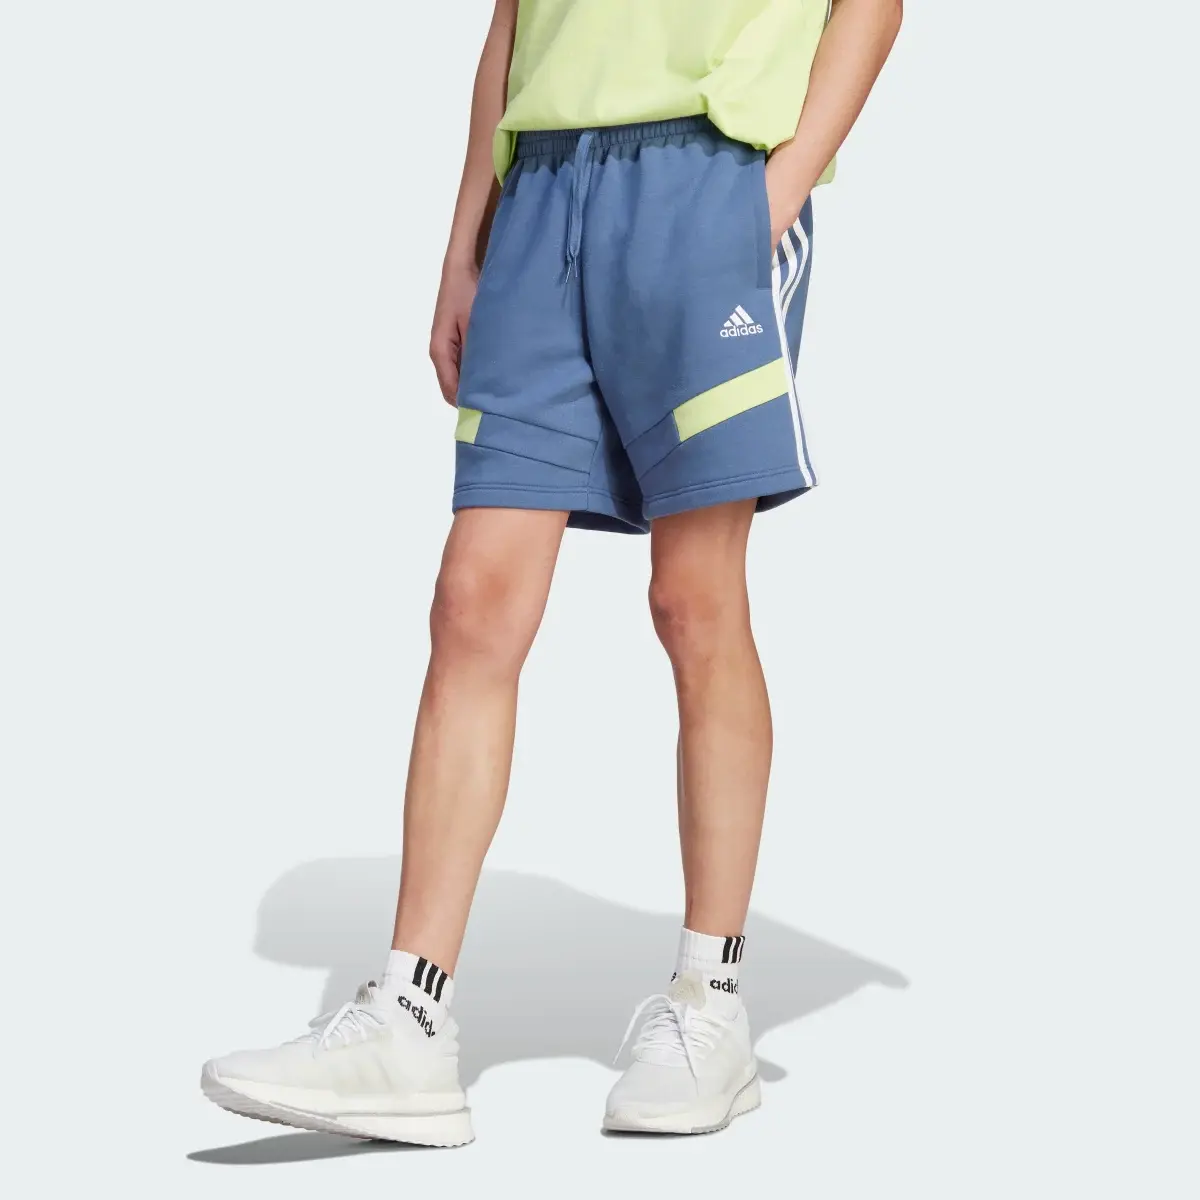 Adidas Short Colorblock. 1